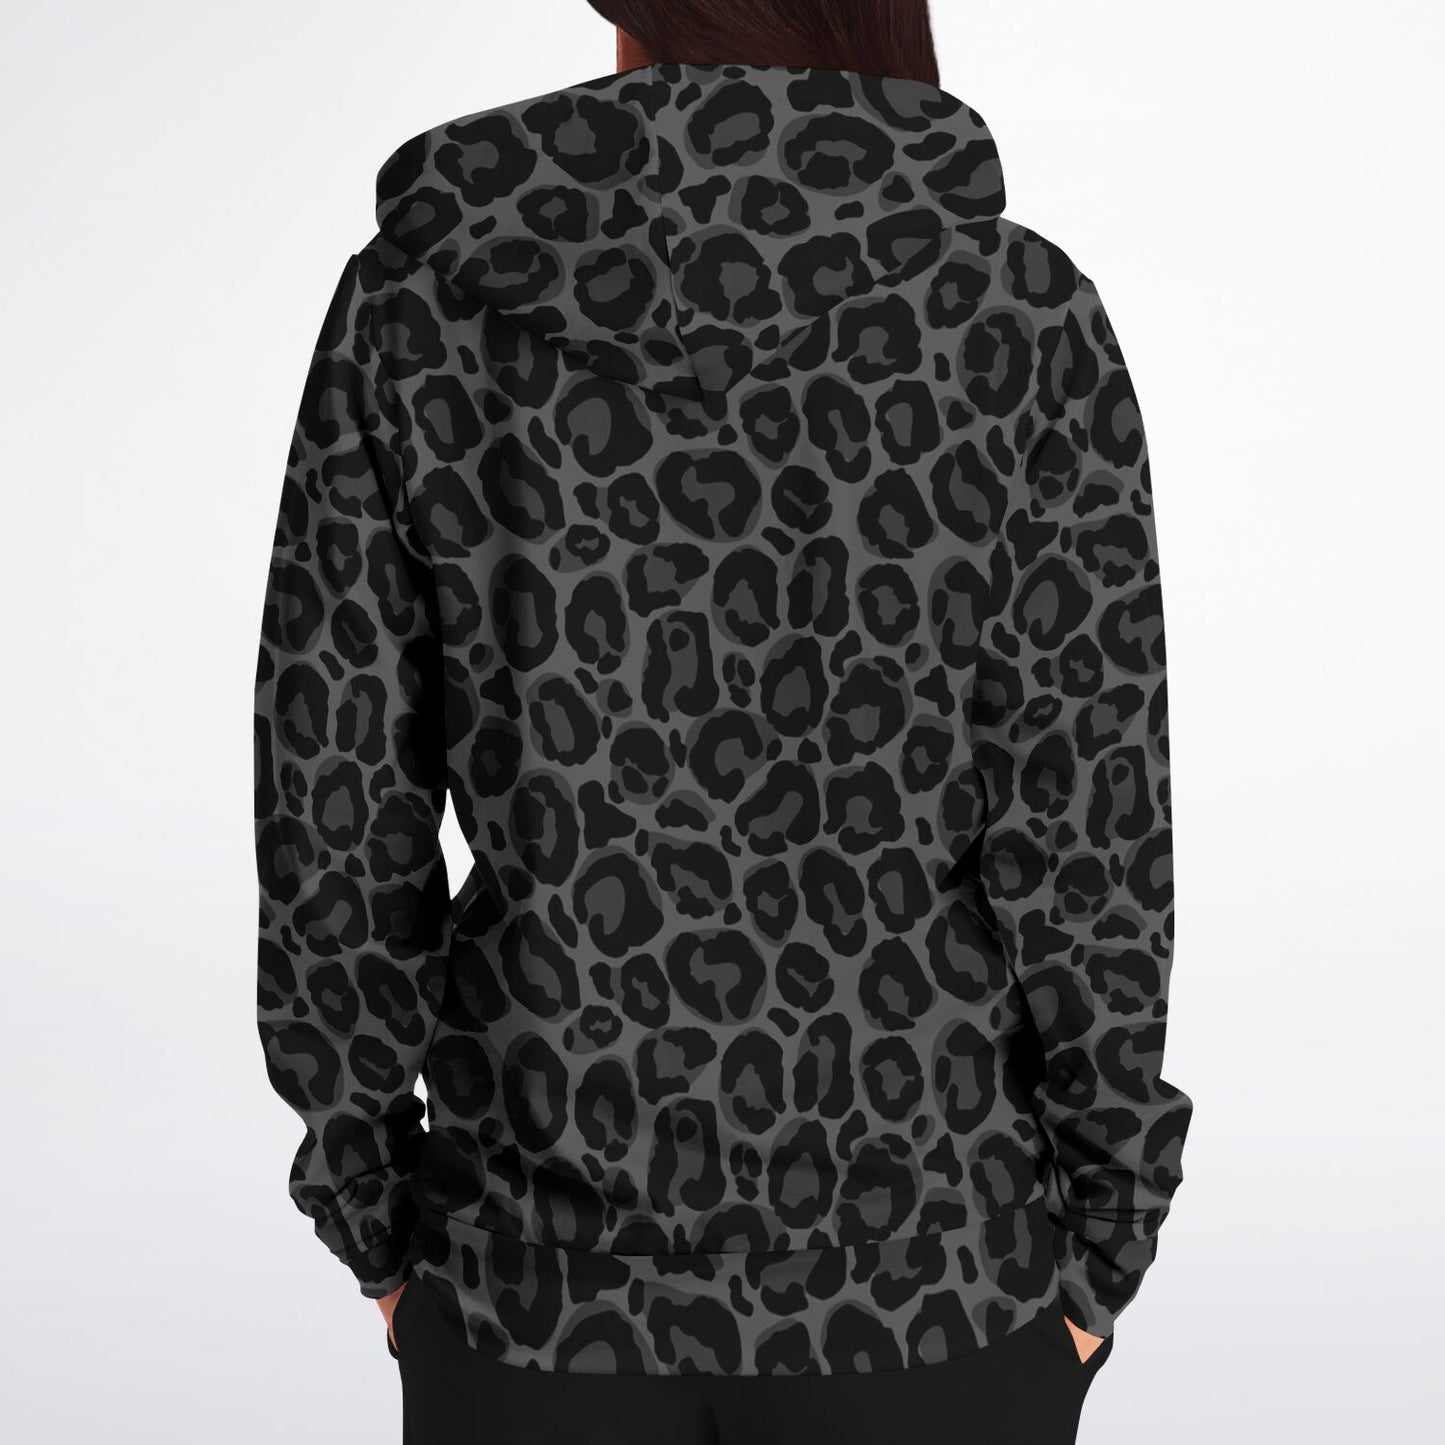 Black Leopard Zip Up Hoodie, Animal Print Cheetah Full Zipper Pocket Men Women Unisex Ladies Cool Aesthetic Cotton Fleece Hooded Sweatshirt